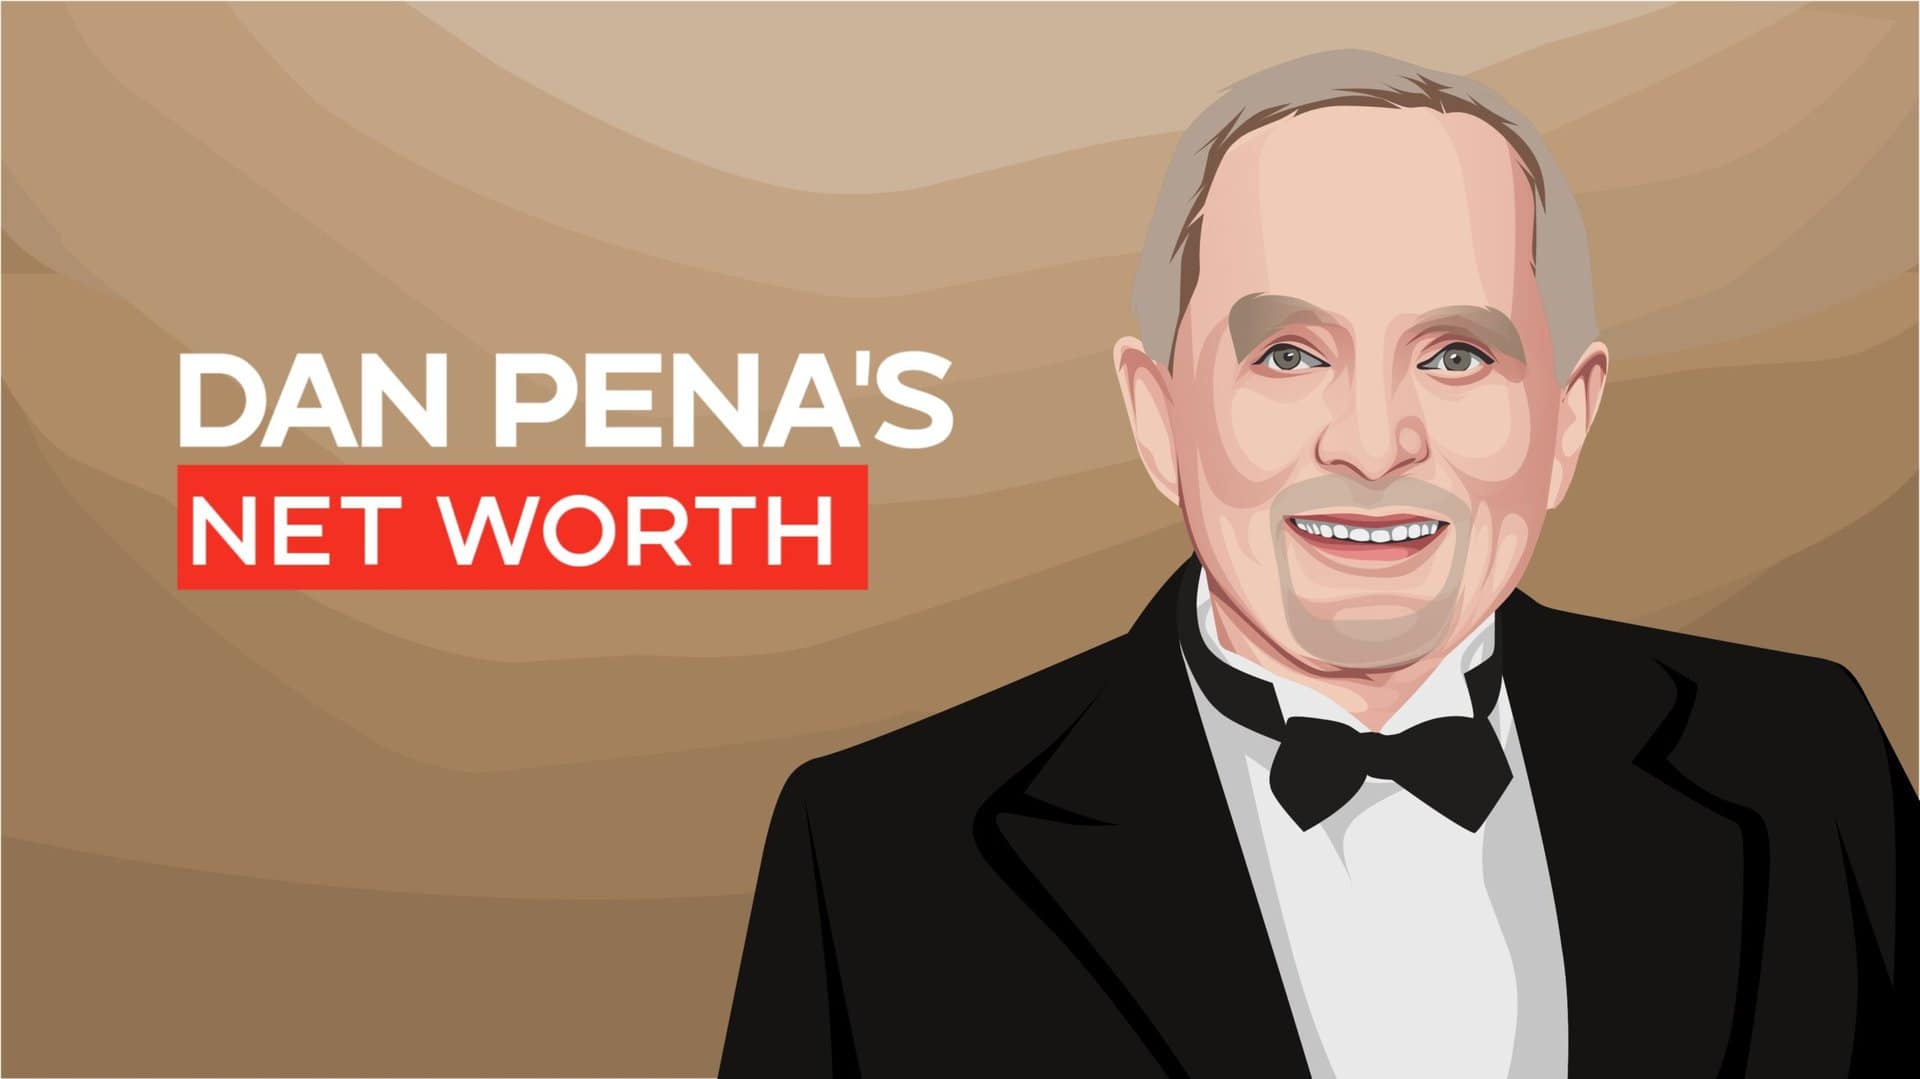 Dan Pena's net worth